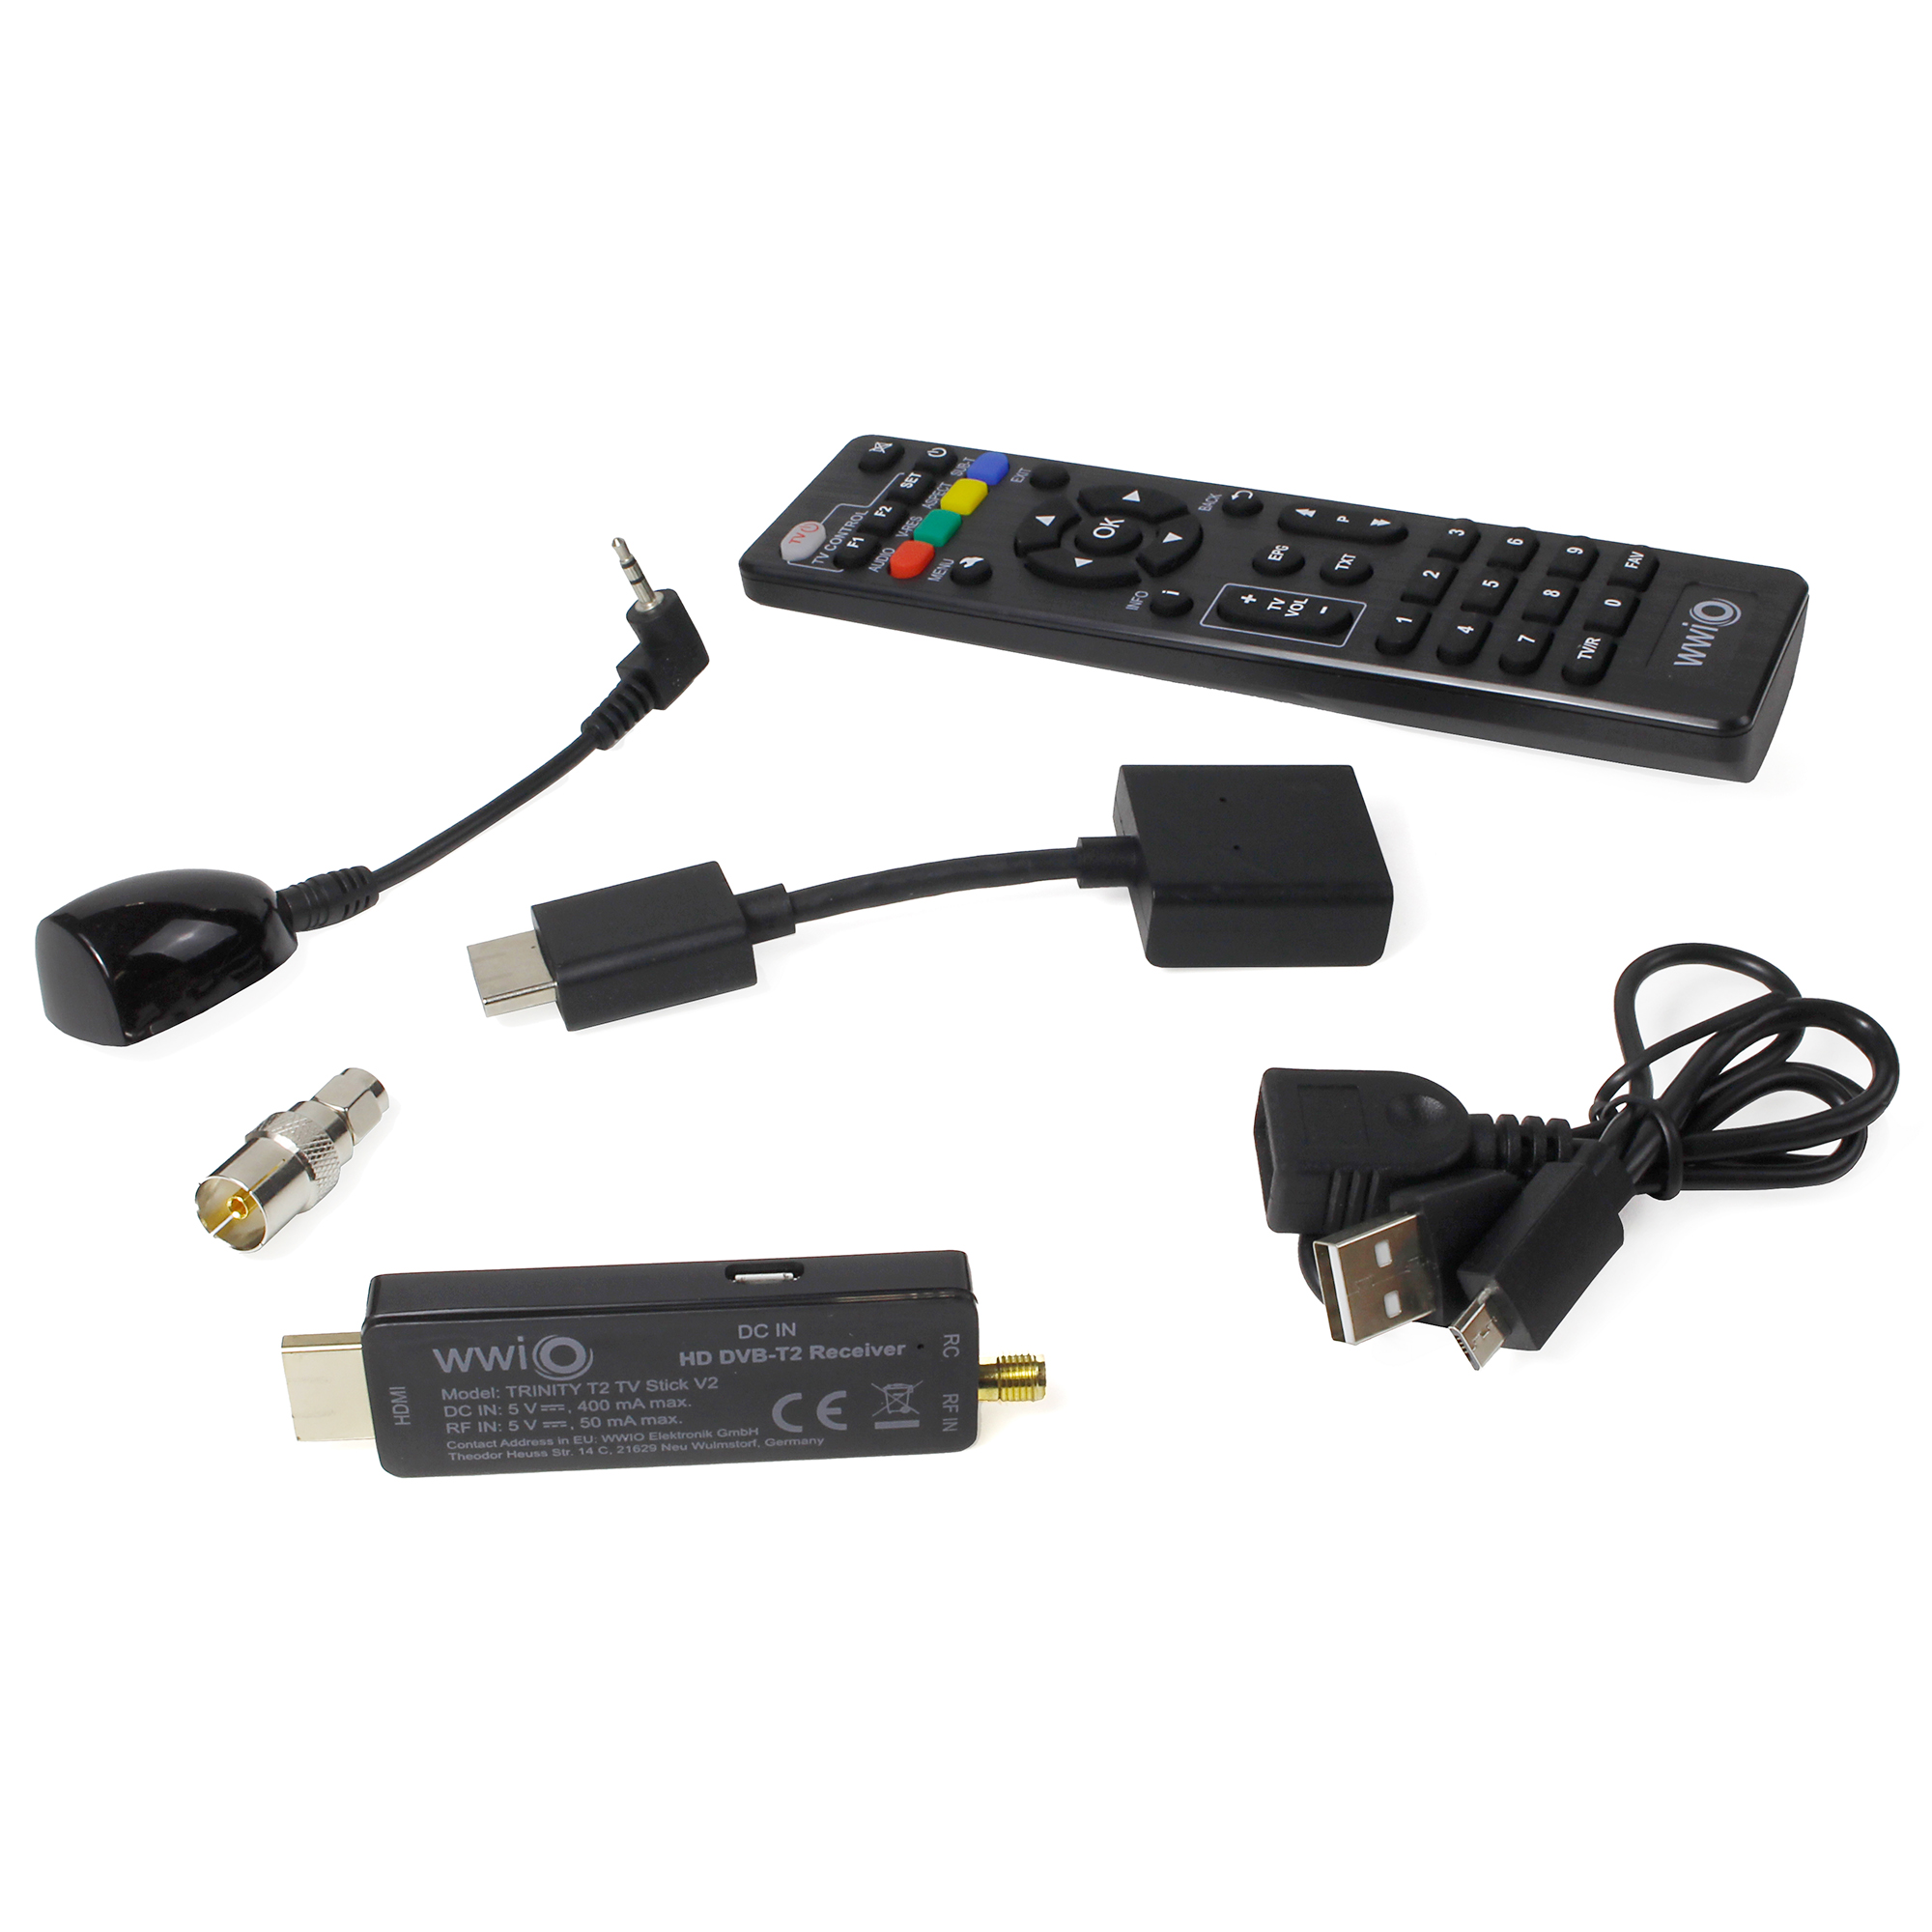 1920x1080 HD Receiver 2 T2 bis WWIO DVB-T2 in FULL TRINITY 1 DVB-T2 Receiver RCU WWIO Auflösung Stick Stick Kompakter TV